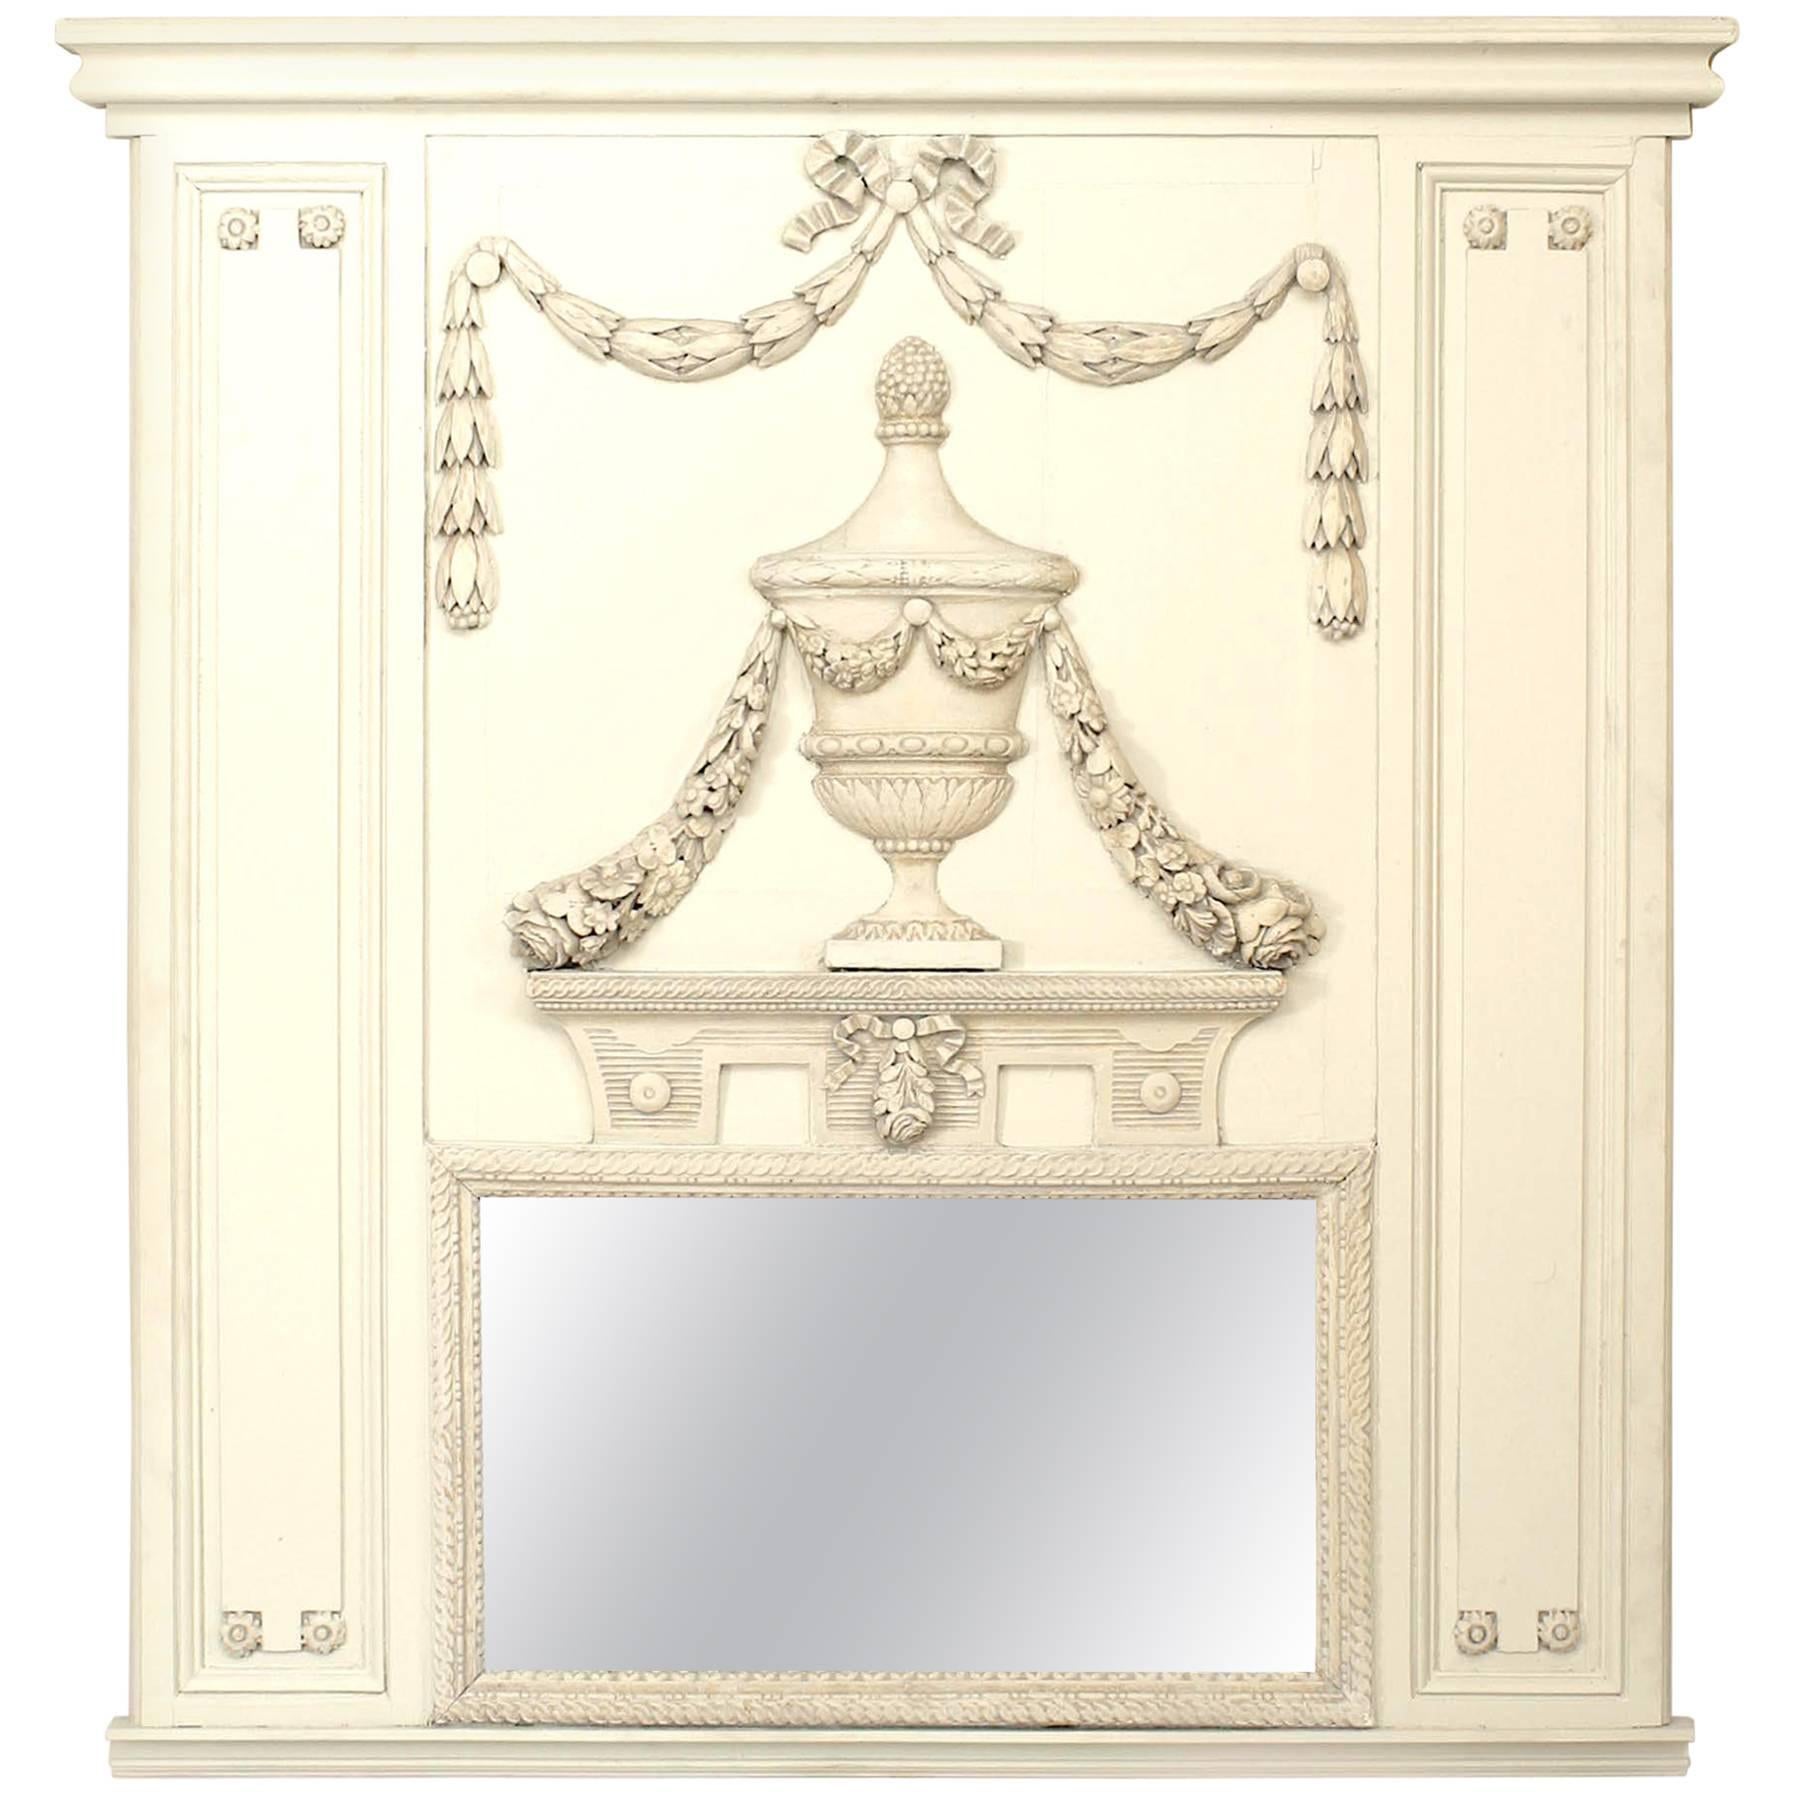 Louis XVI White Painted Urn and Festoon Design Trumeau / Wall Mirror